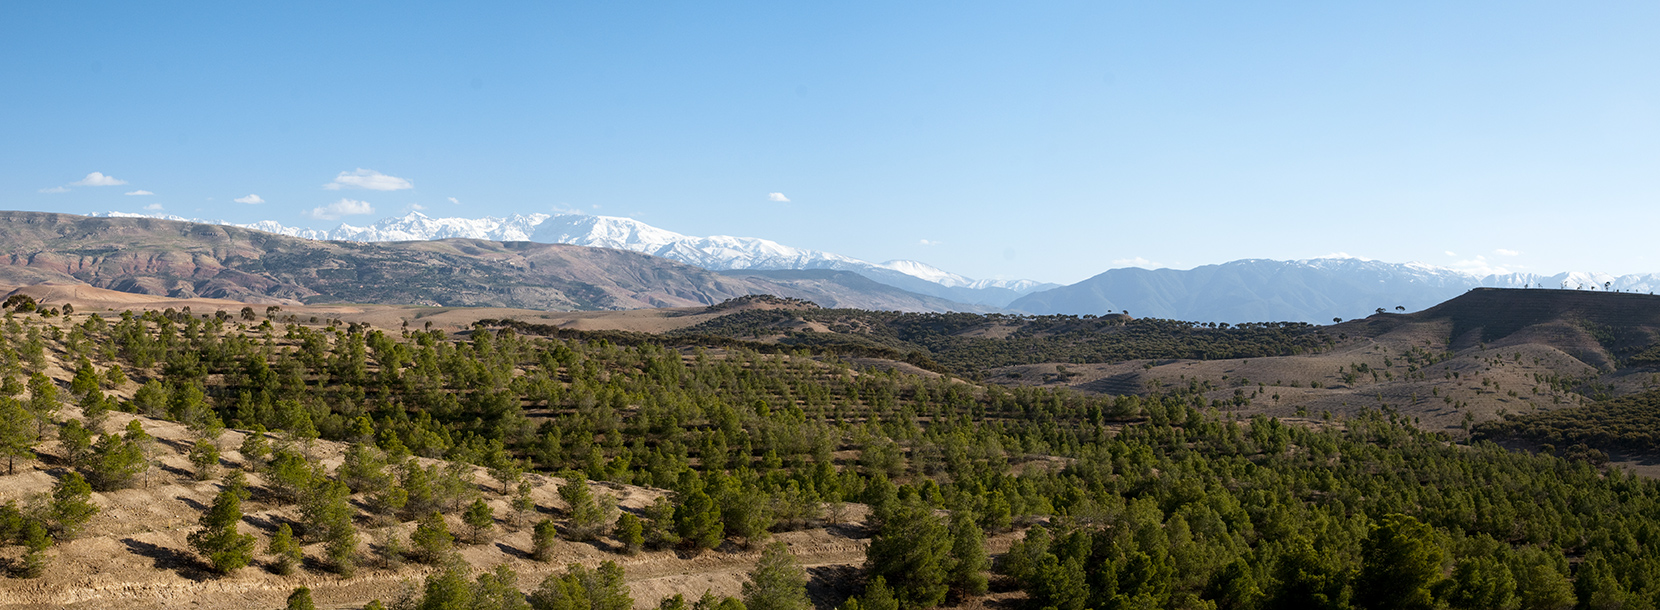 Das Atlas-Gebirge in Marrakesch